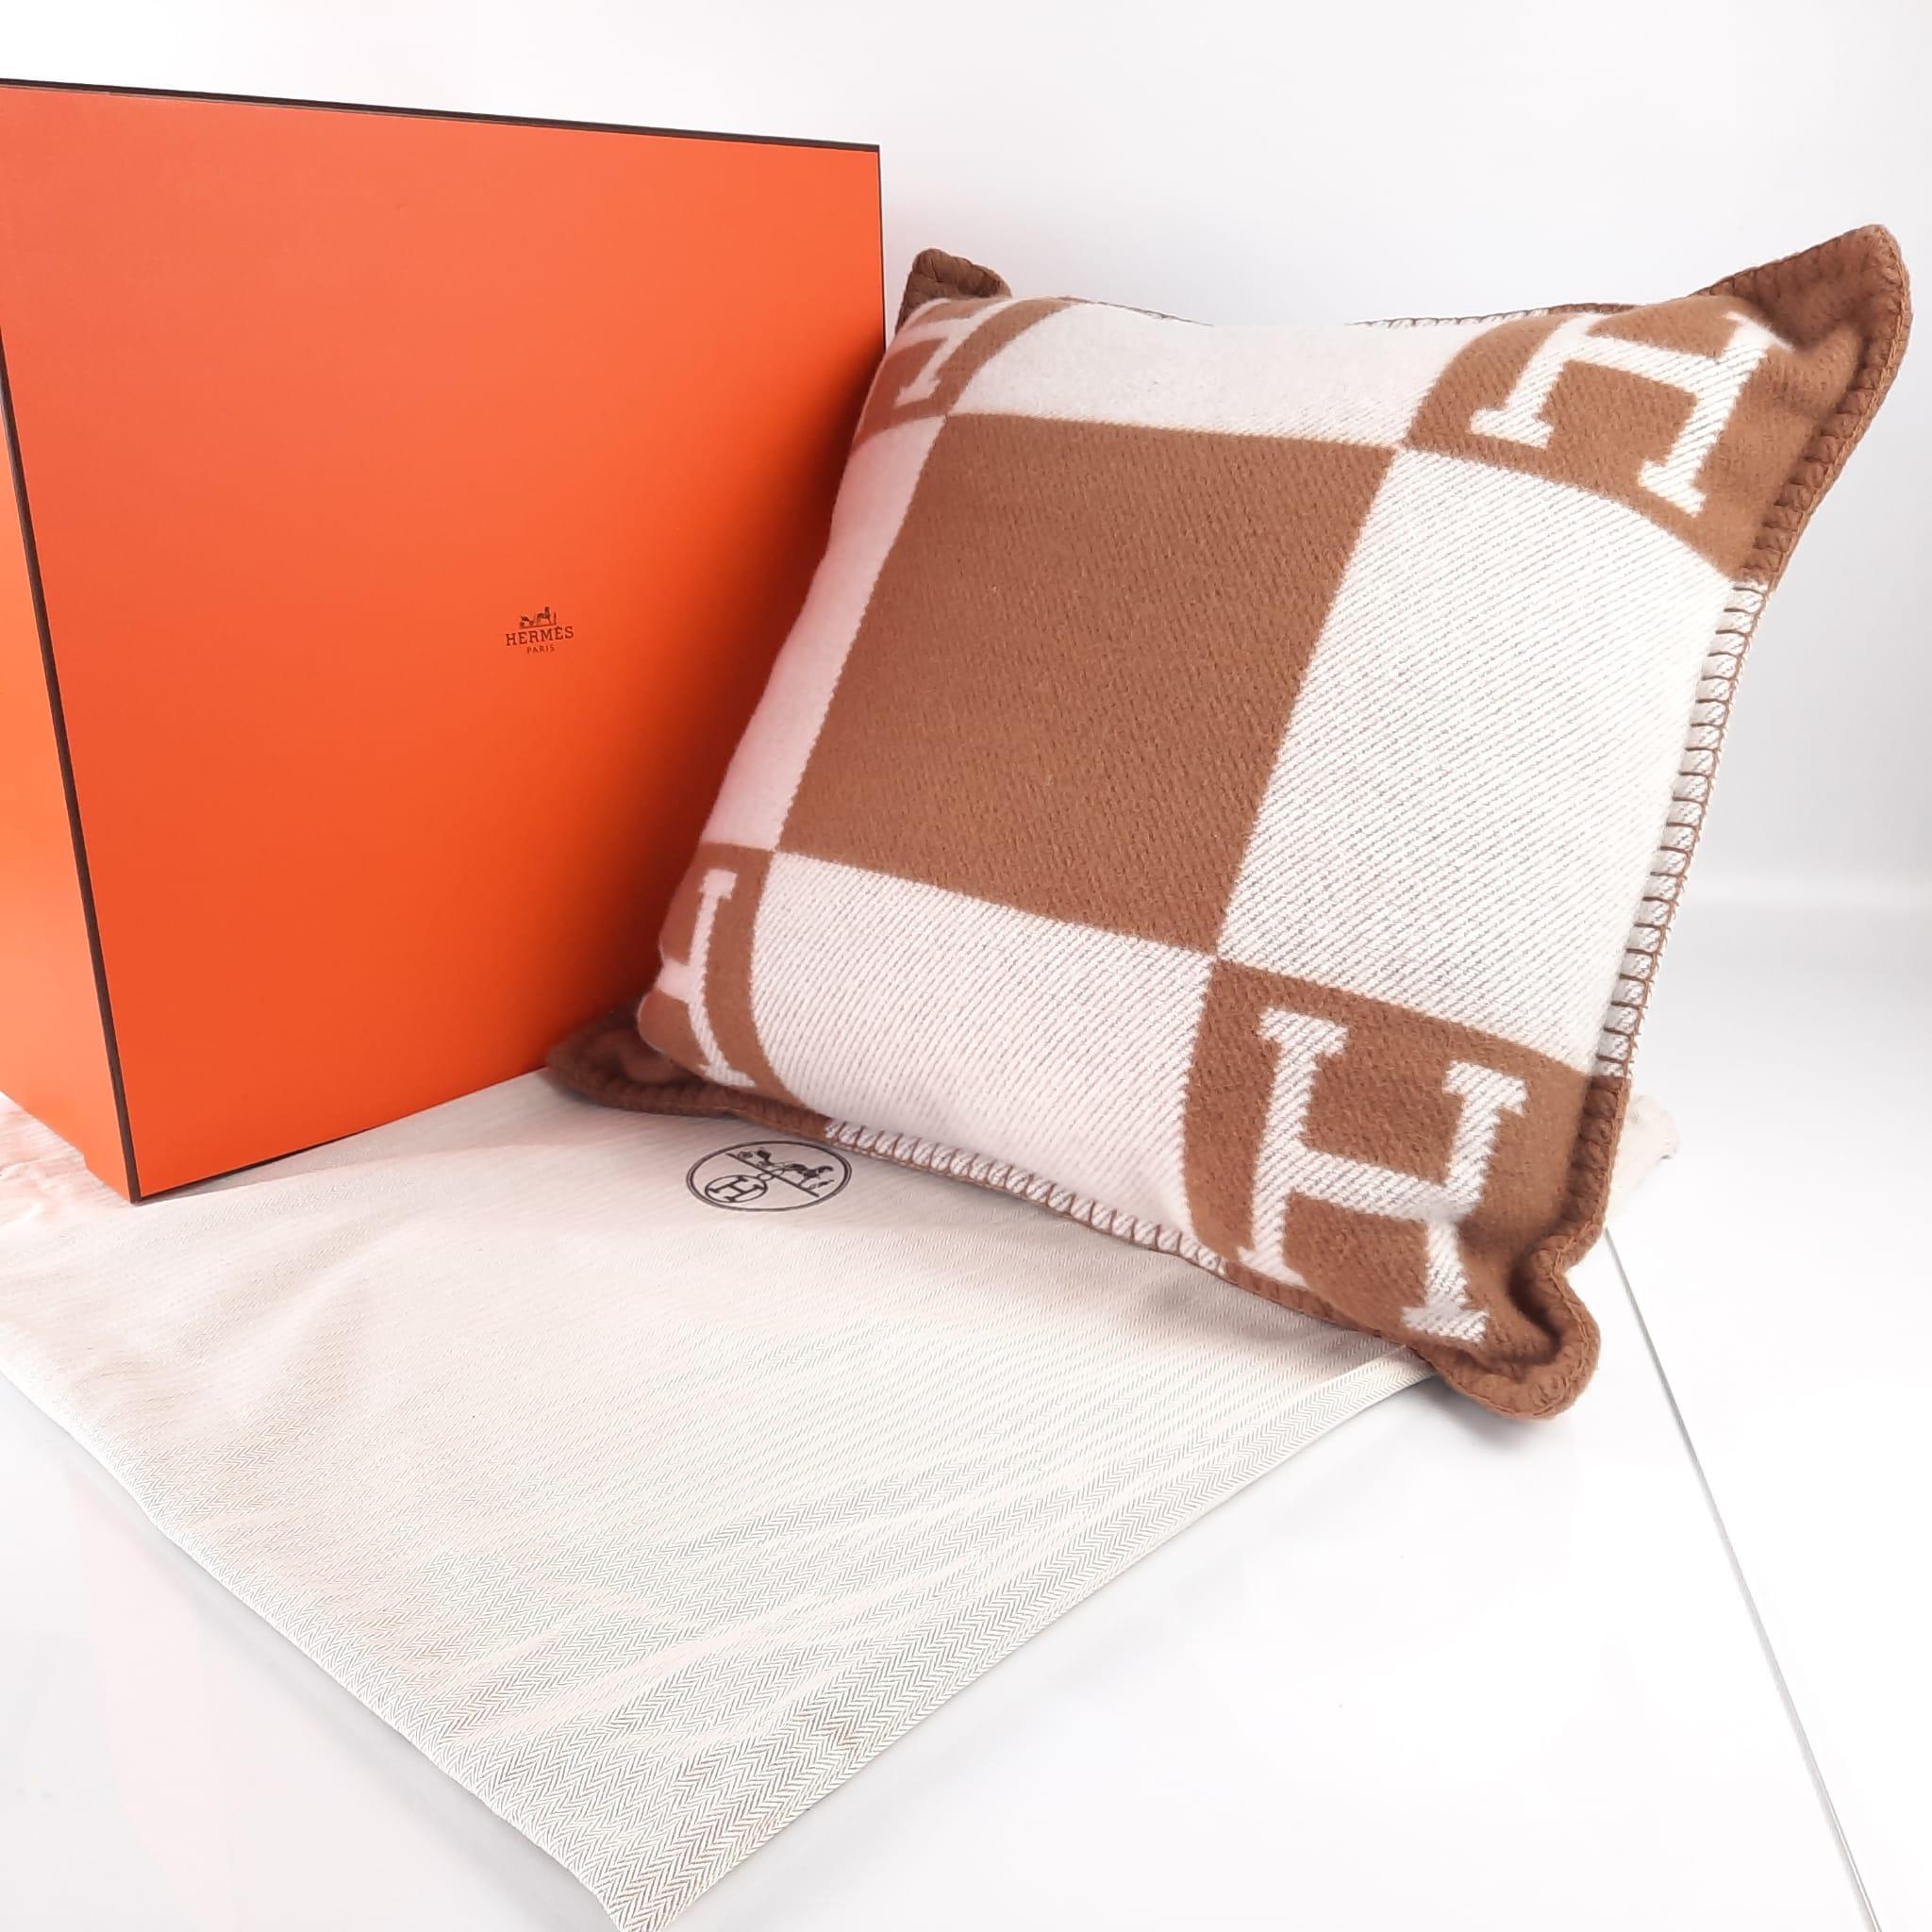 Brown Hermes Écru / Camel Avalon cushion, small model